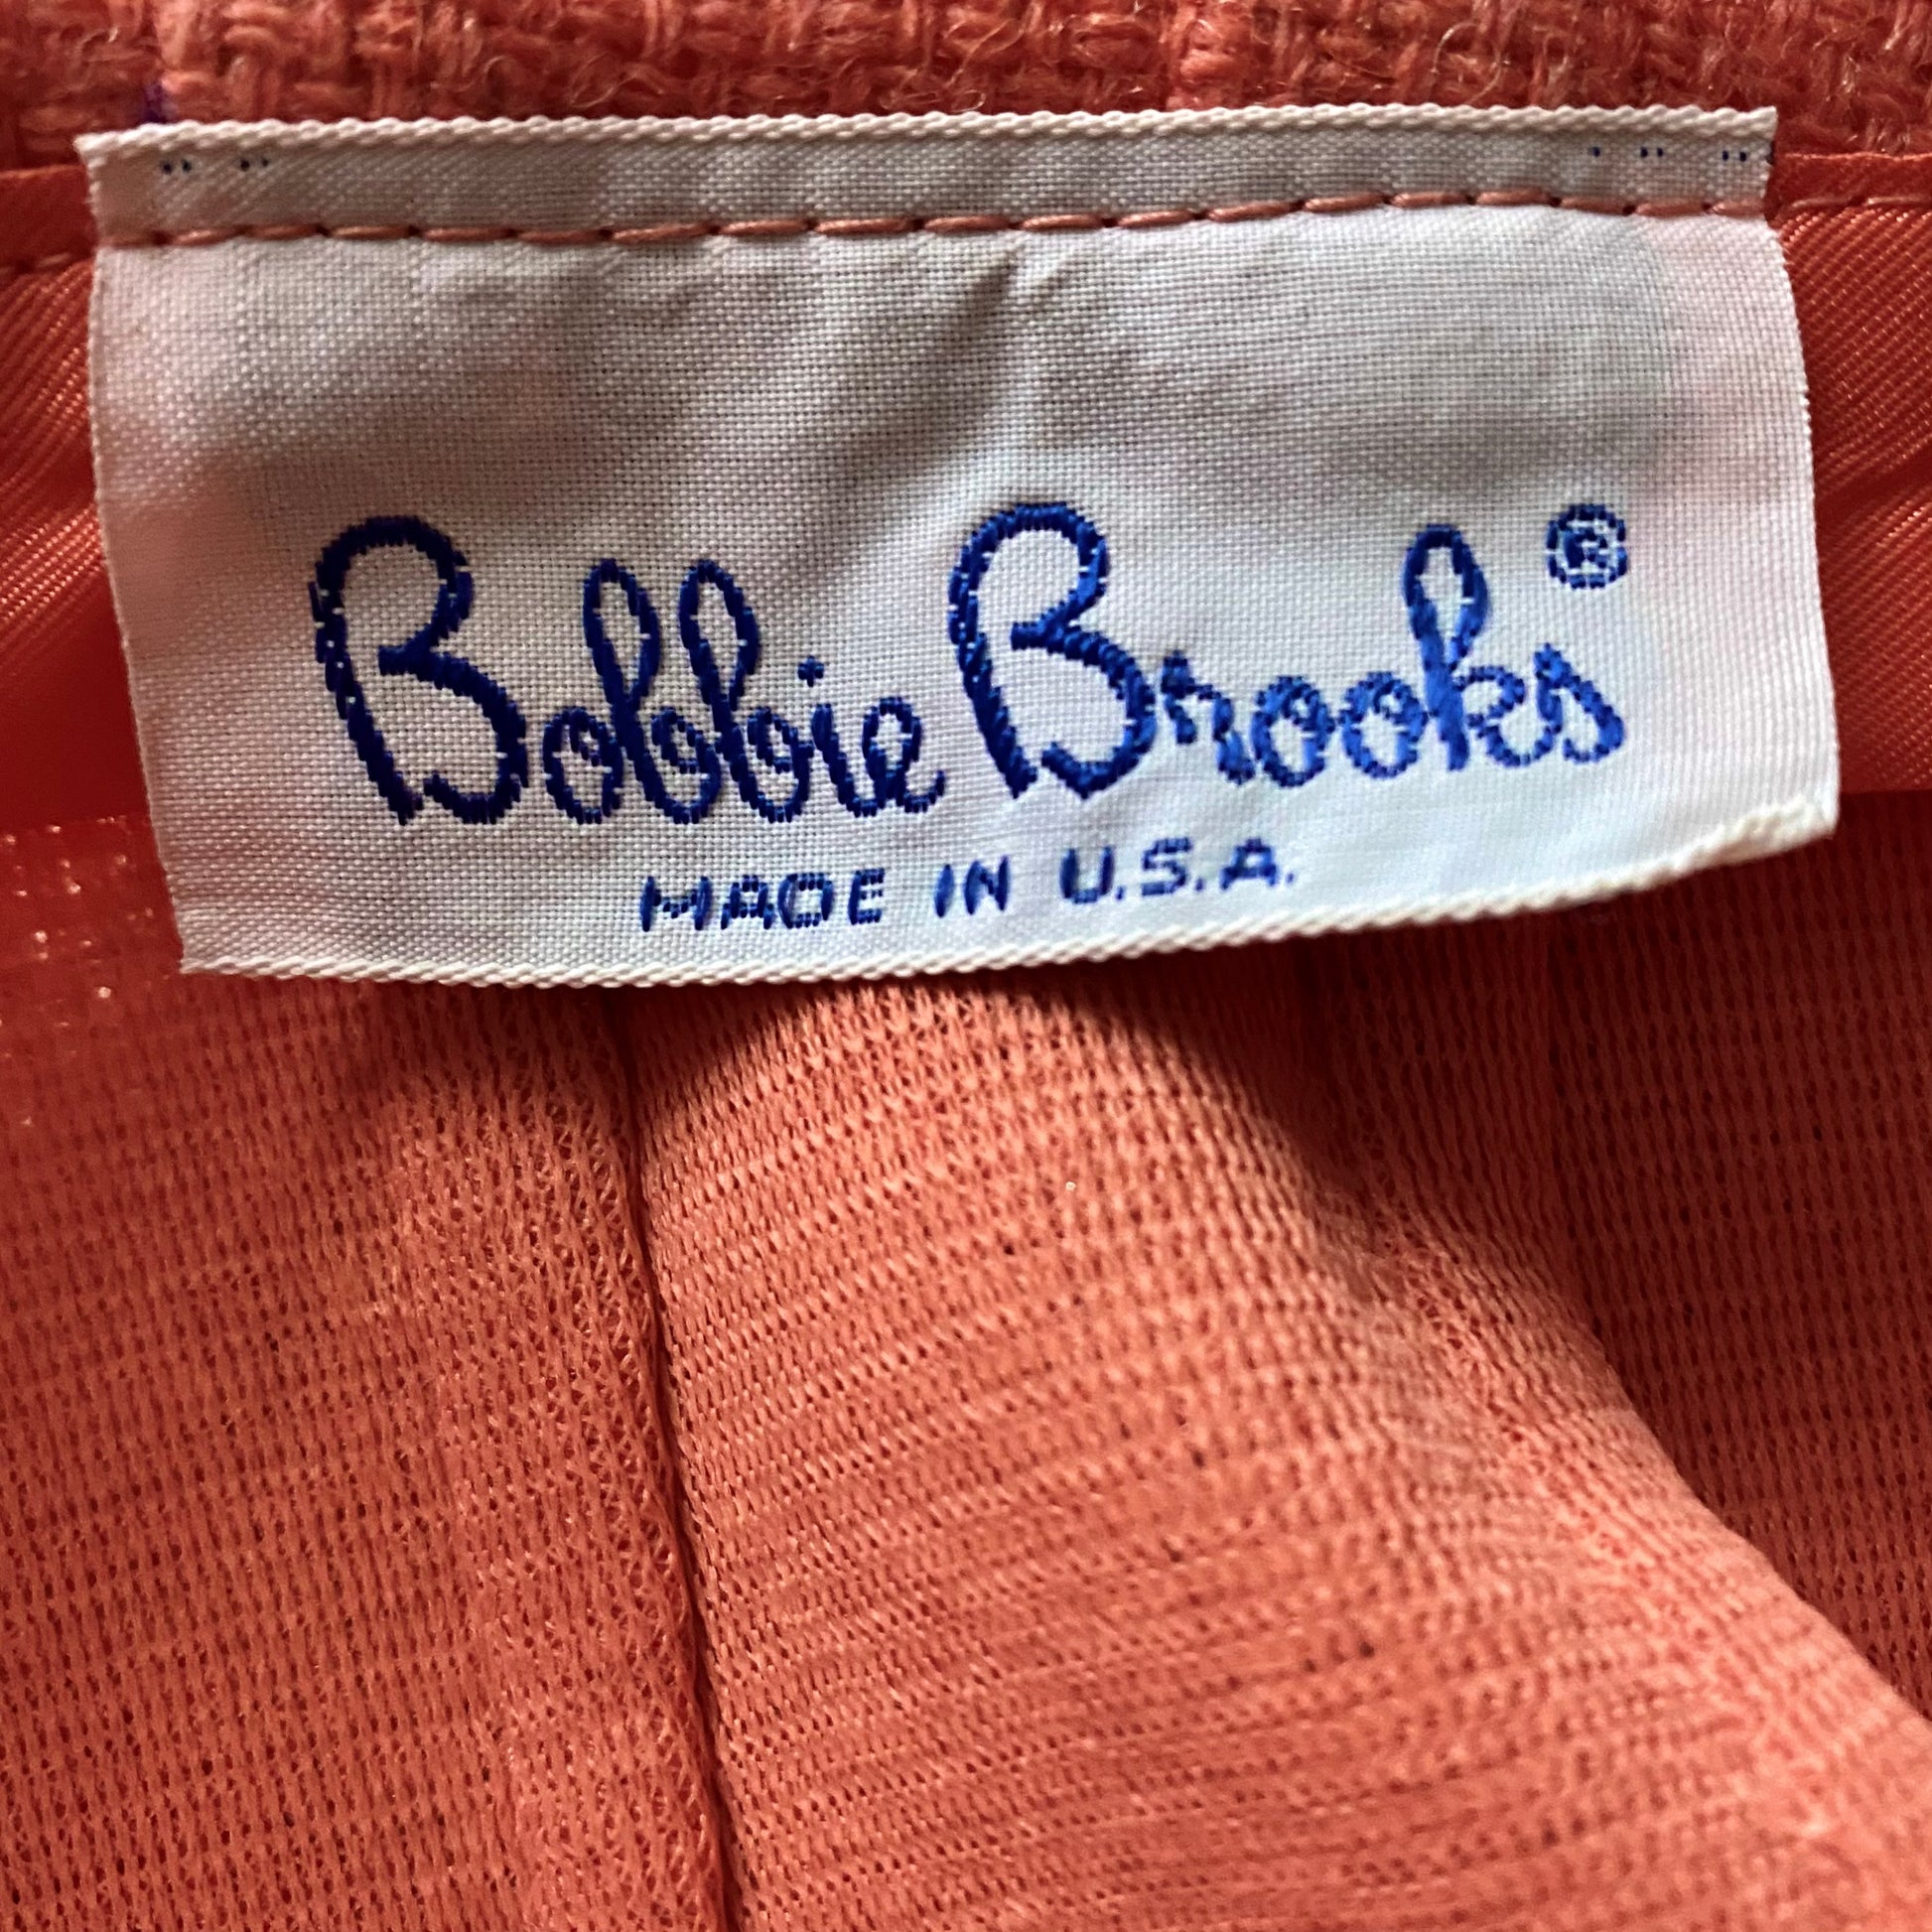 1960s Tailored By Bobbie Brooks Suit – Retro Kandy Vintage